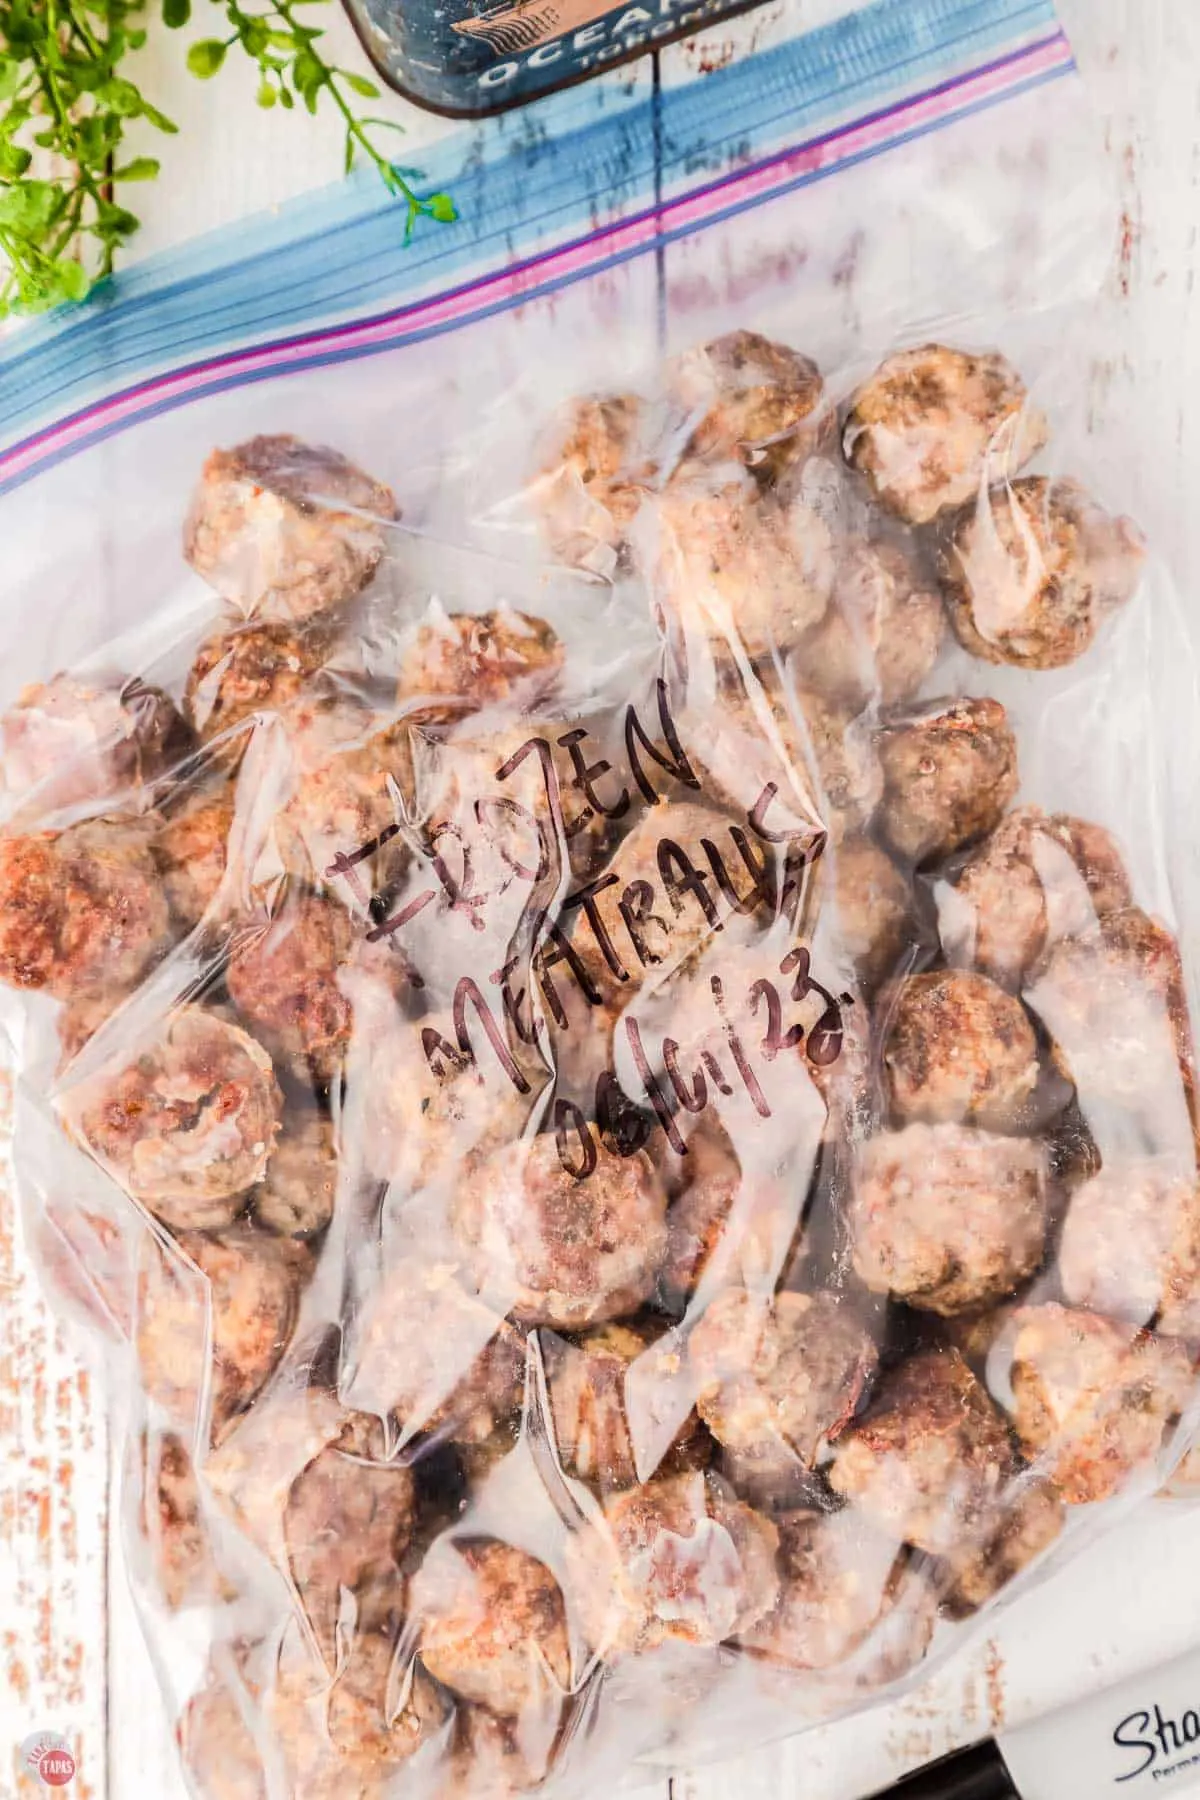 frozen meatballs make for easy crockpot meals